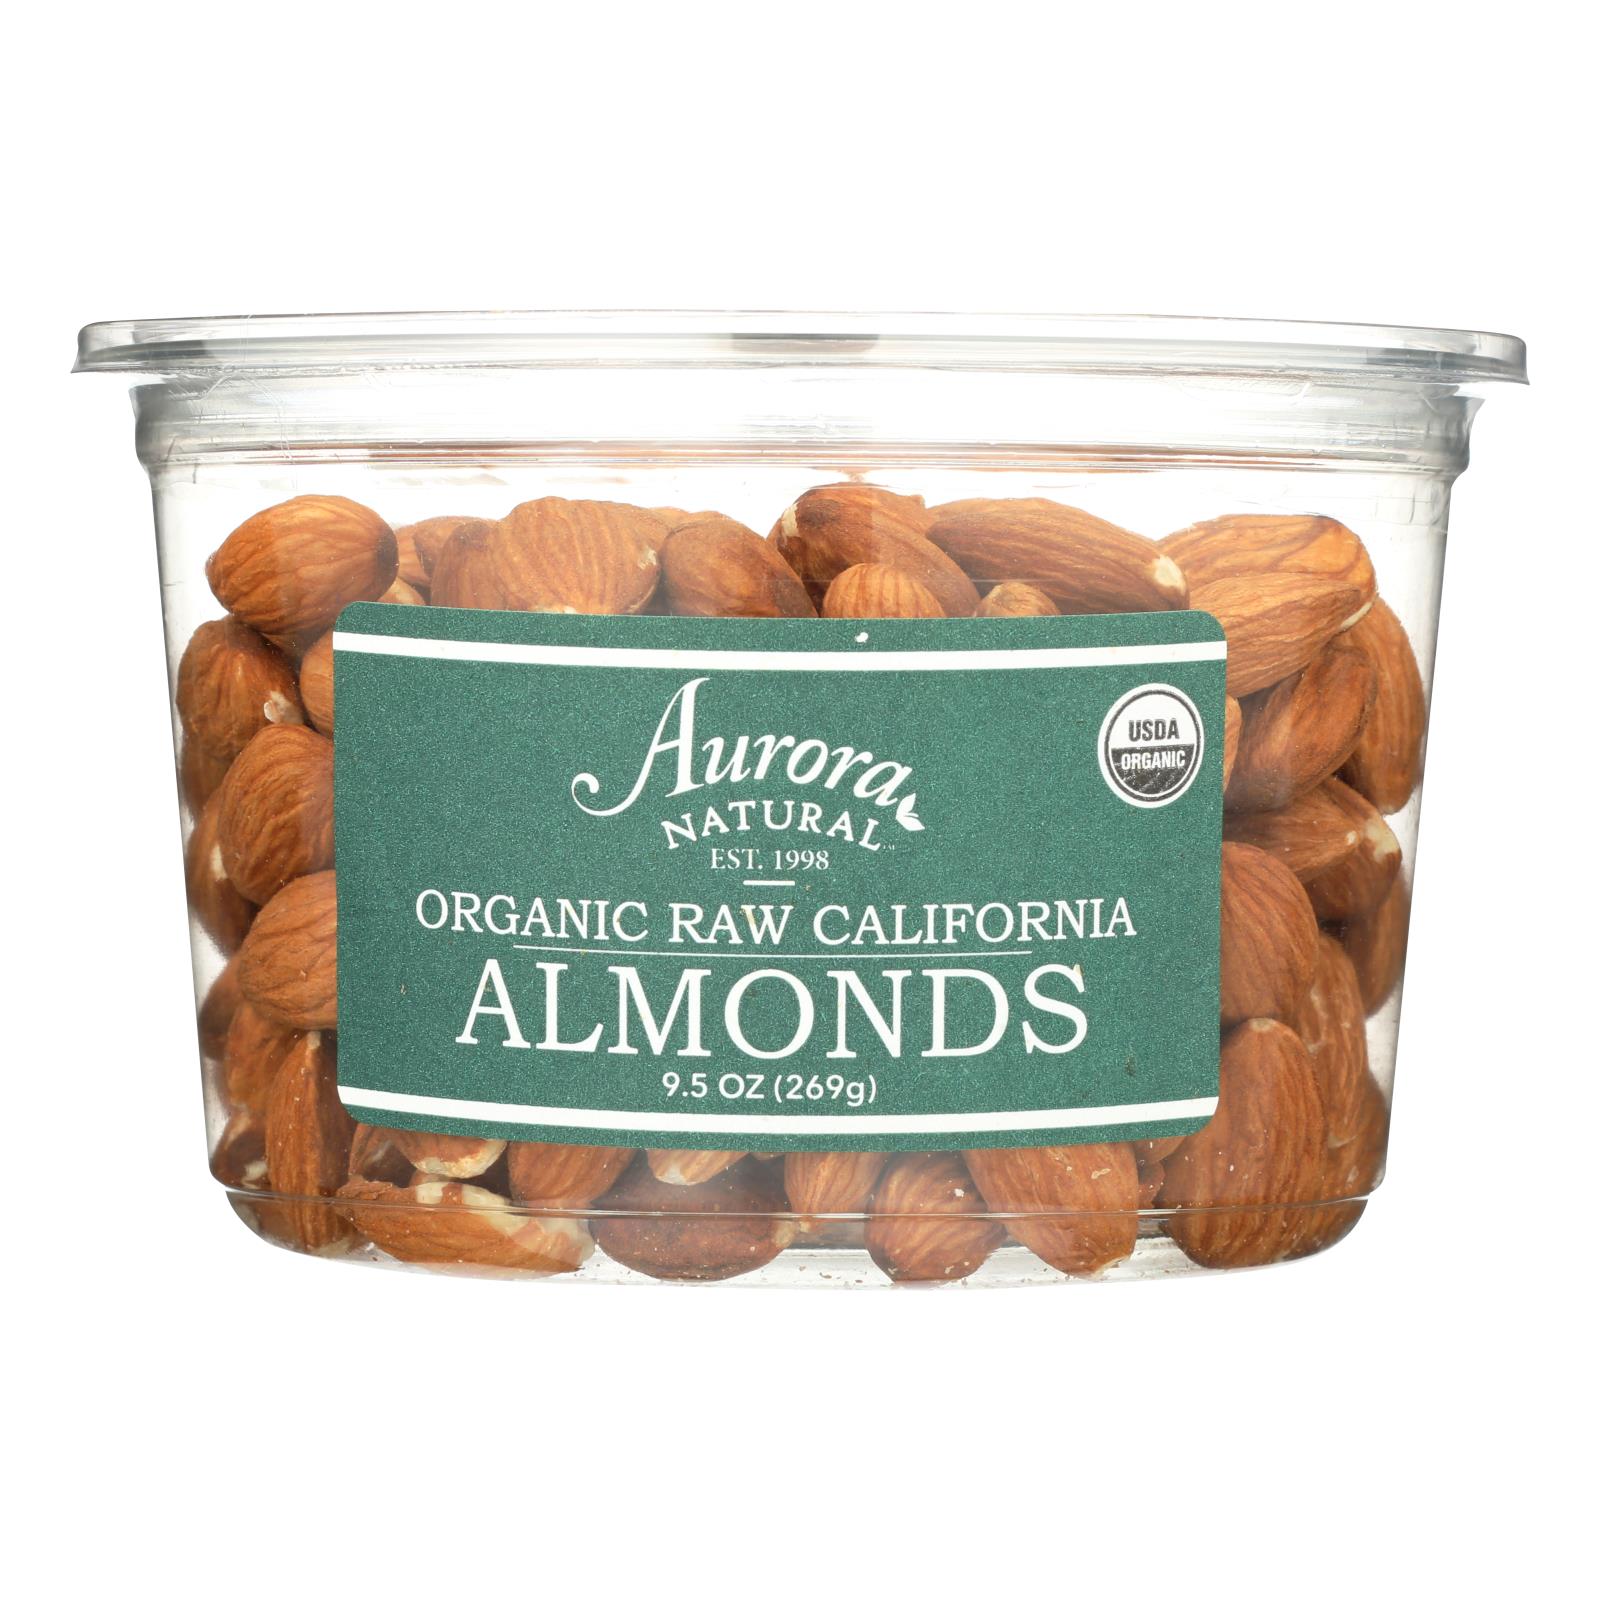 Aurora Natural Products - Organic Raw California Almonds - 12개 묶음상품 - 9.5 oz.